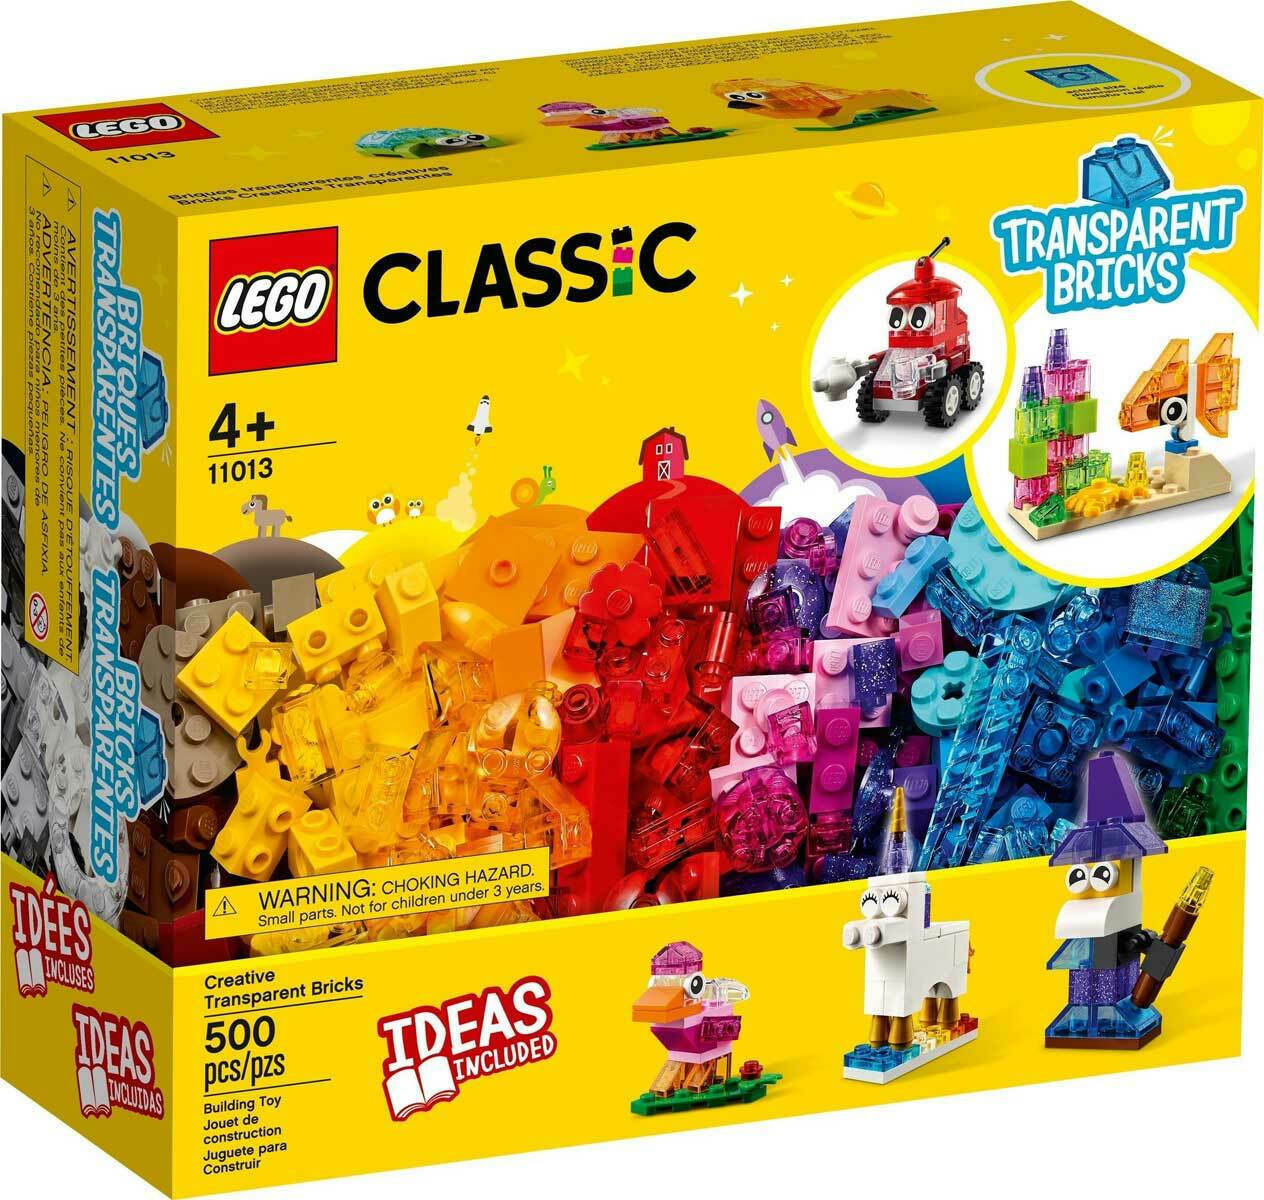 LEGO CLASSIC 11013 CREATIVE TRANSPARENT BRICKS